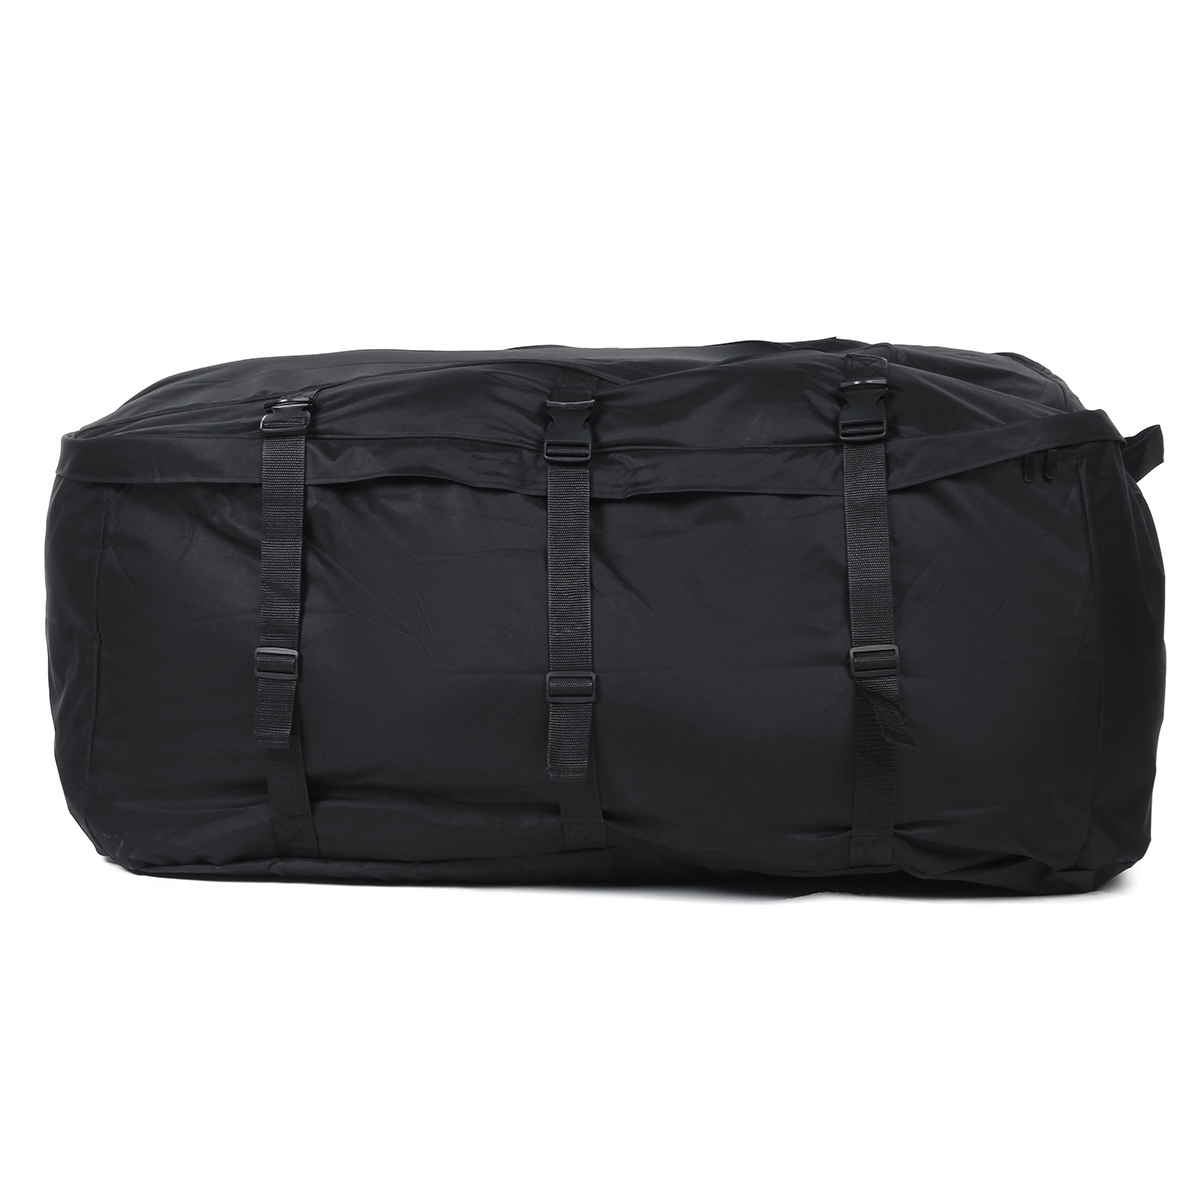 Portable-Travel-Storage-Bag-Waterproof-Car-SUV-Roof-Top-Rack-Bag-600D-Oxford-Travel-Luggage-Storage--1812090-8